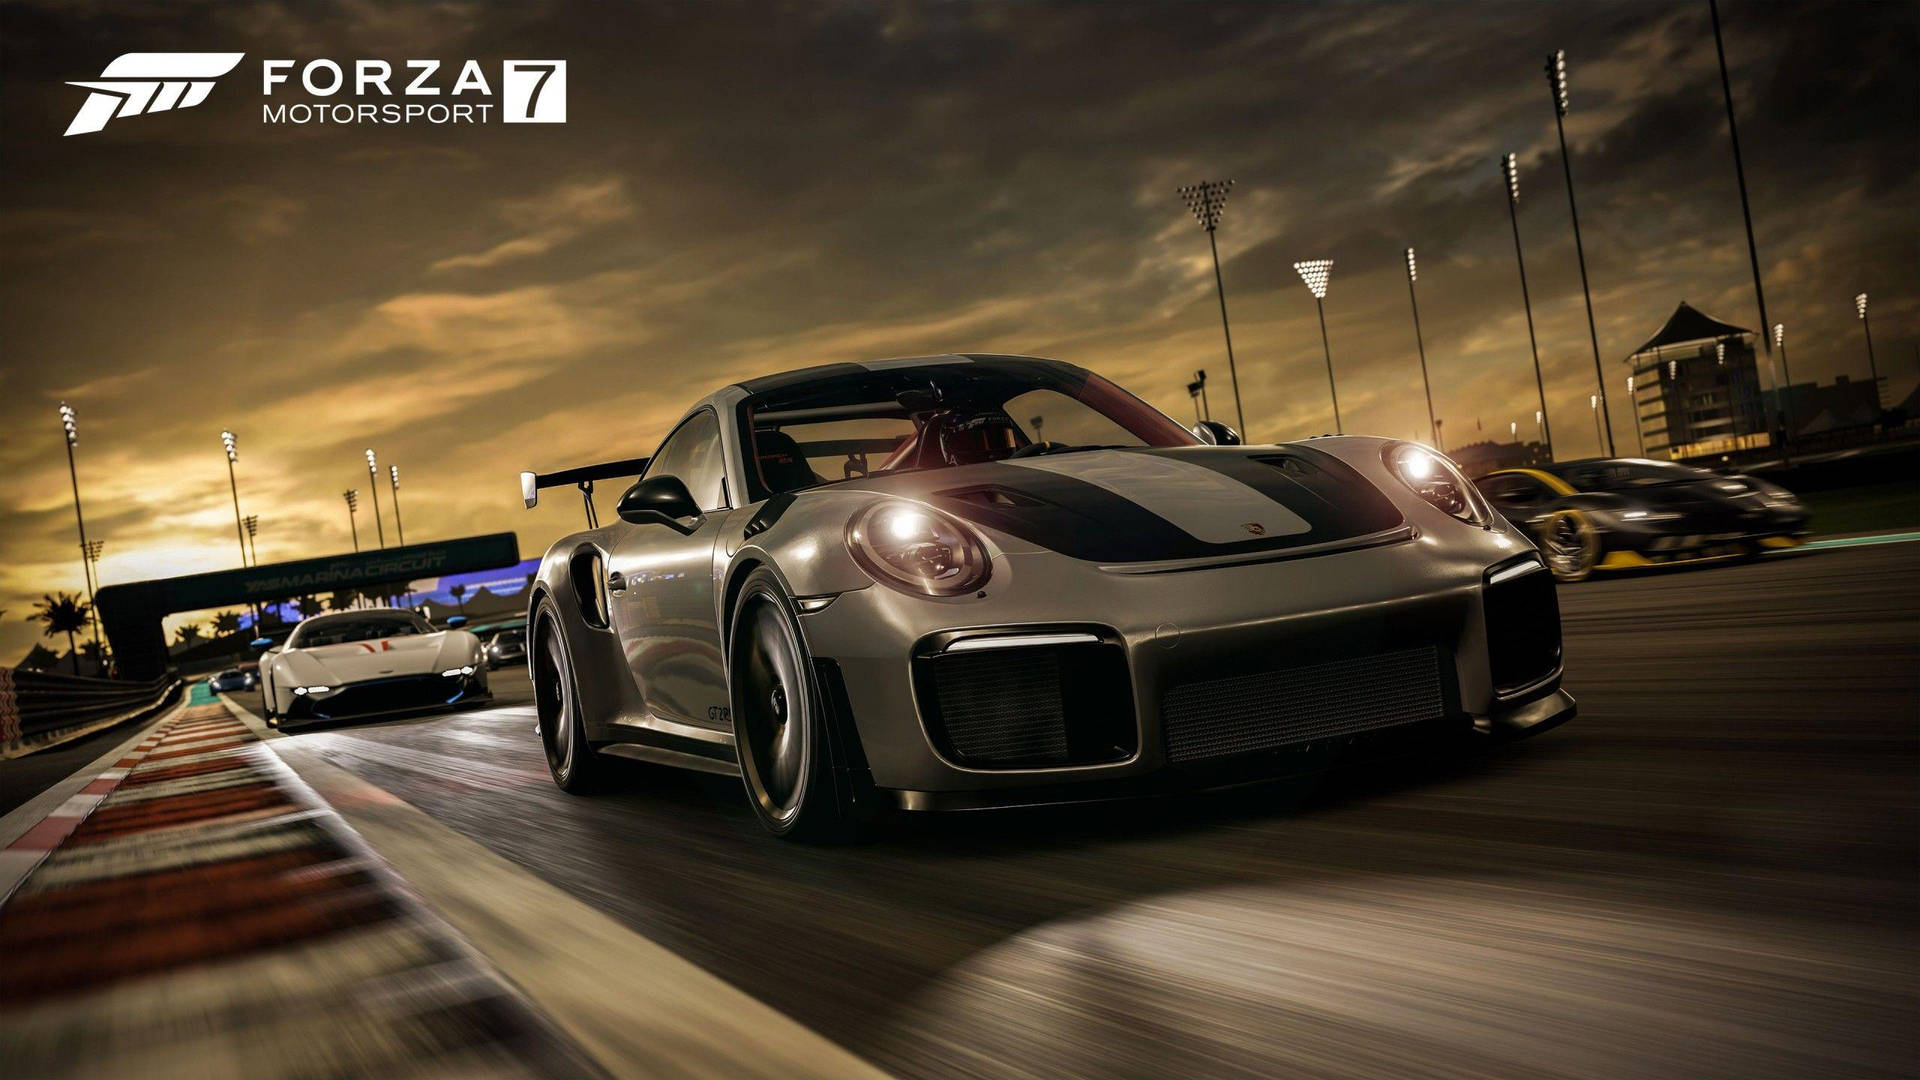 Forza7 Porsche Autorennen Wallpaper